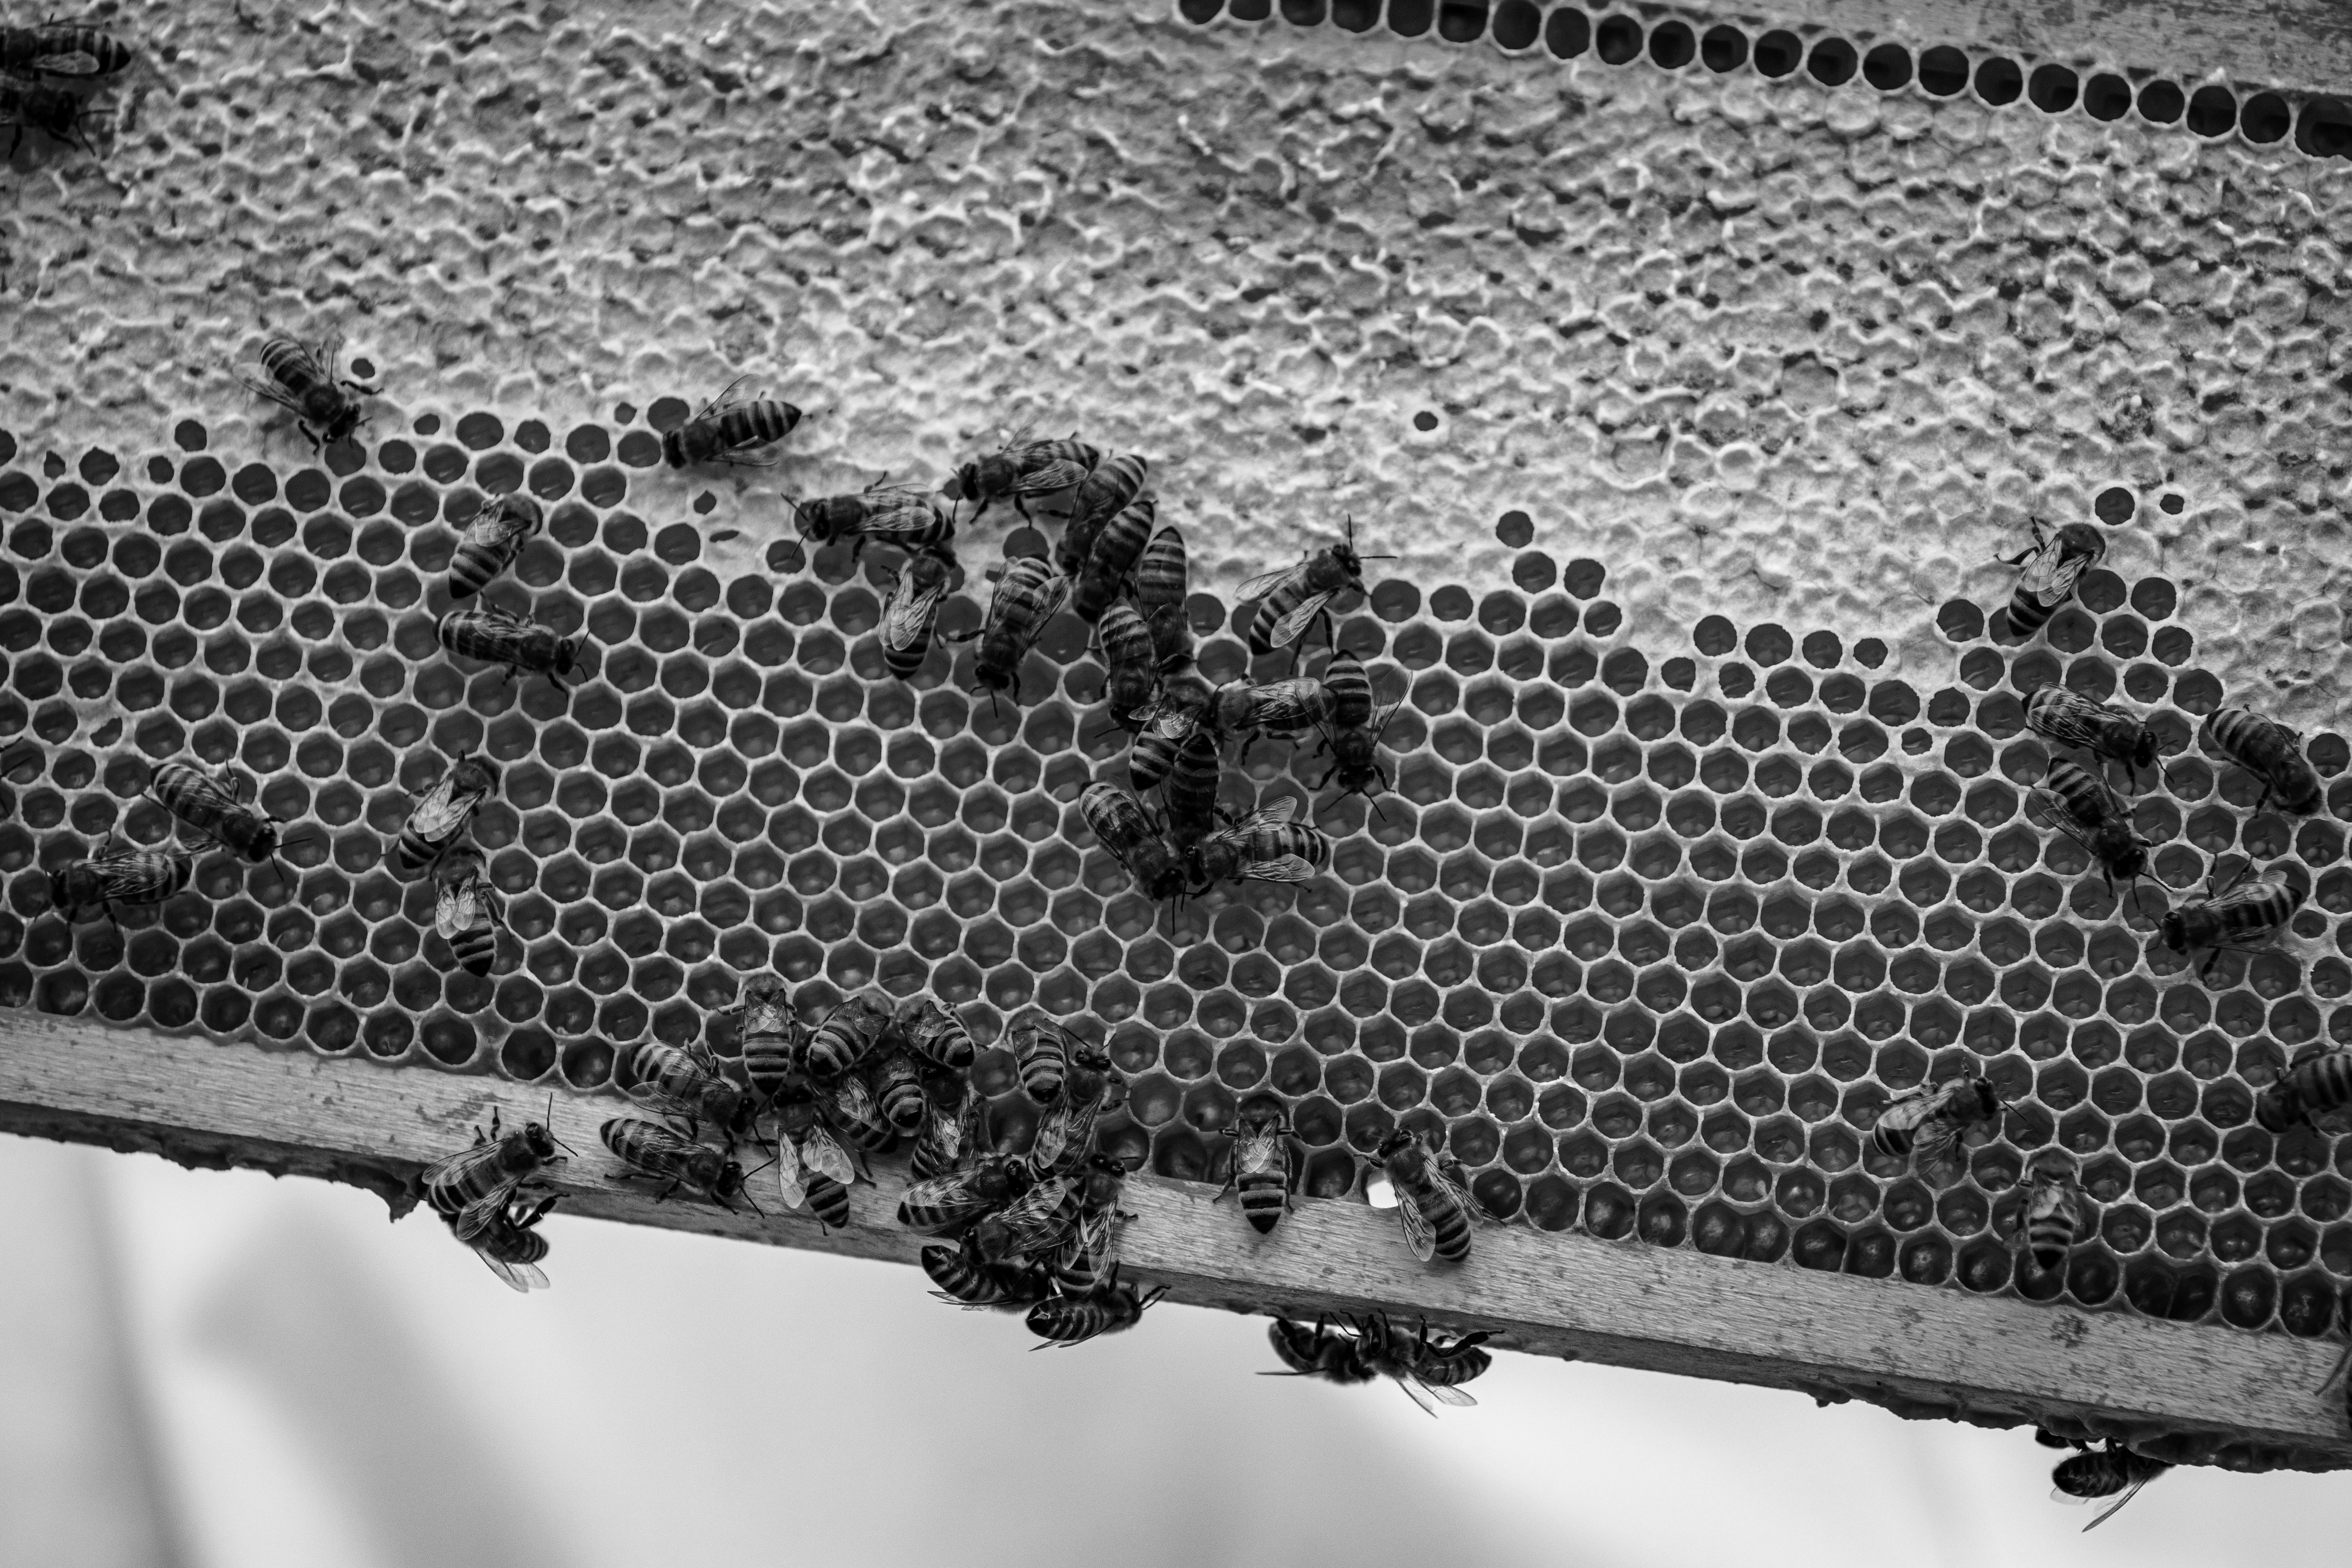 beekeeper controls his bee colonies